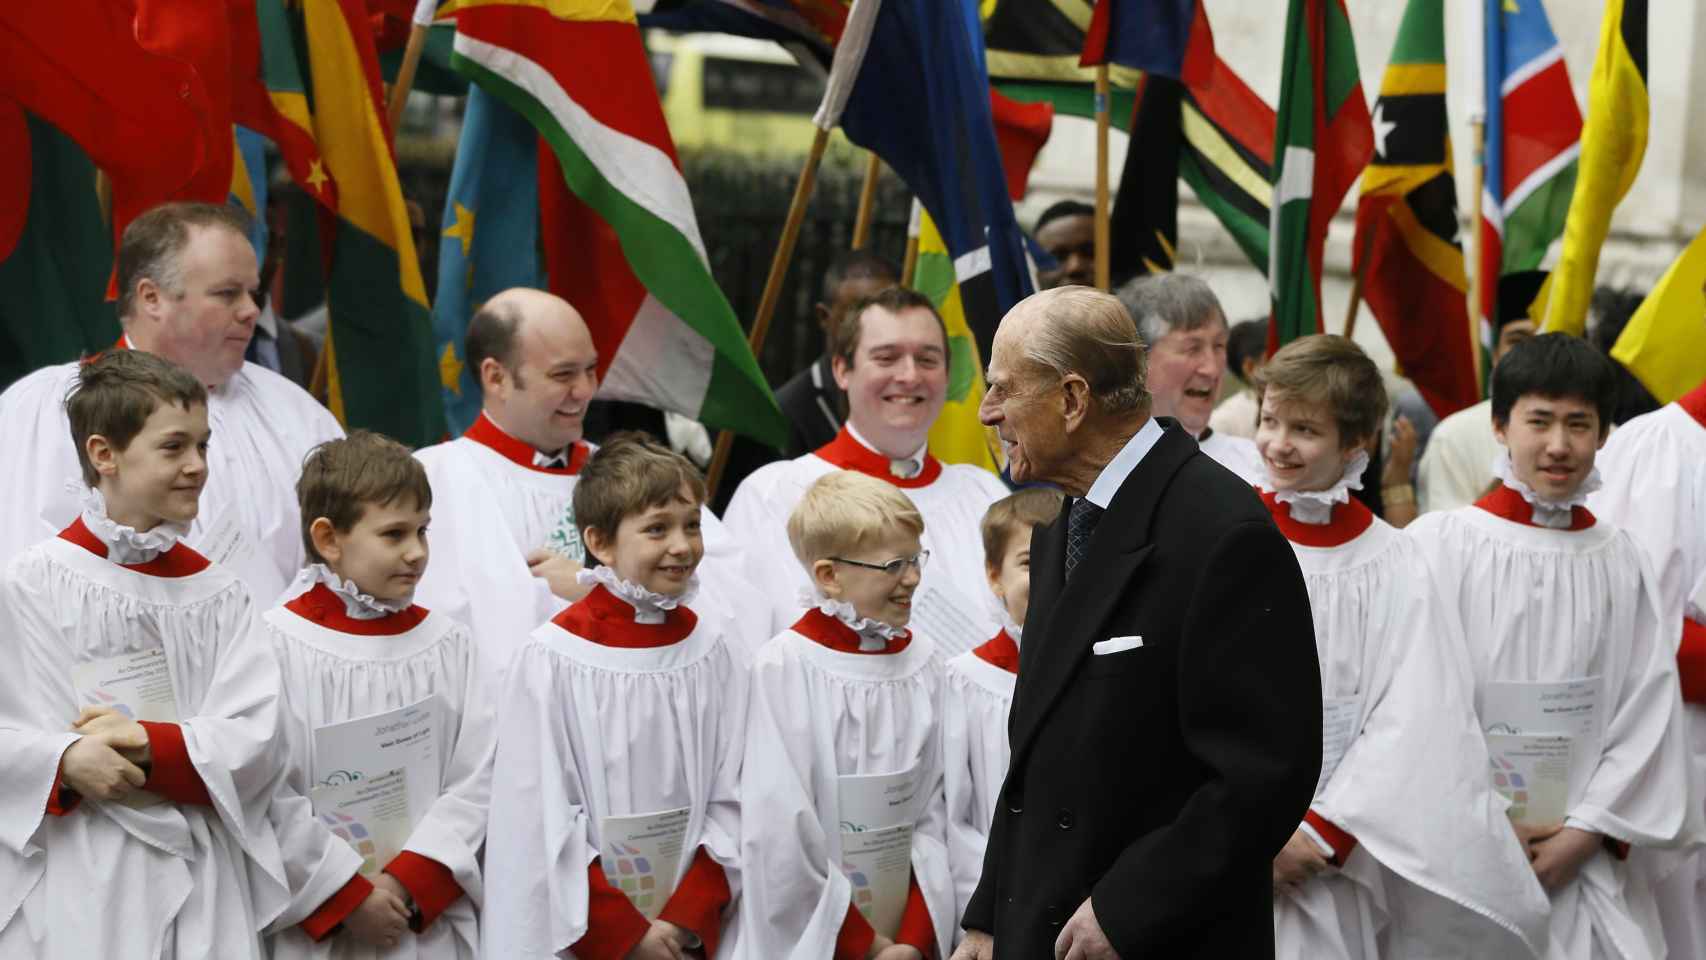 Felipe de Edimburgo charla con unos niños del coro.